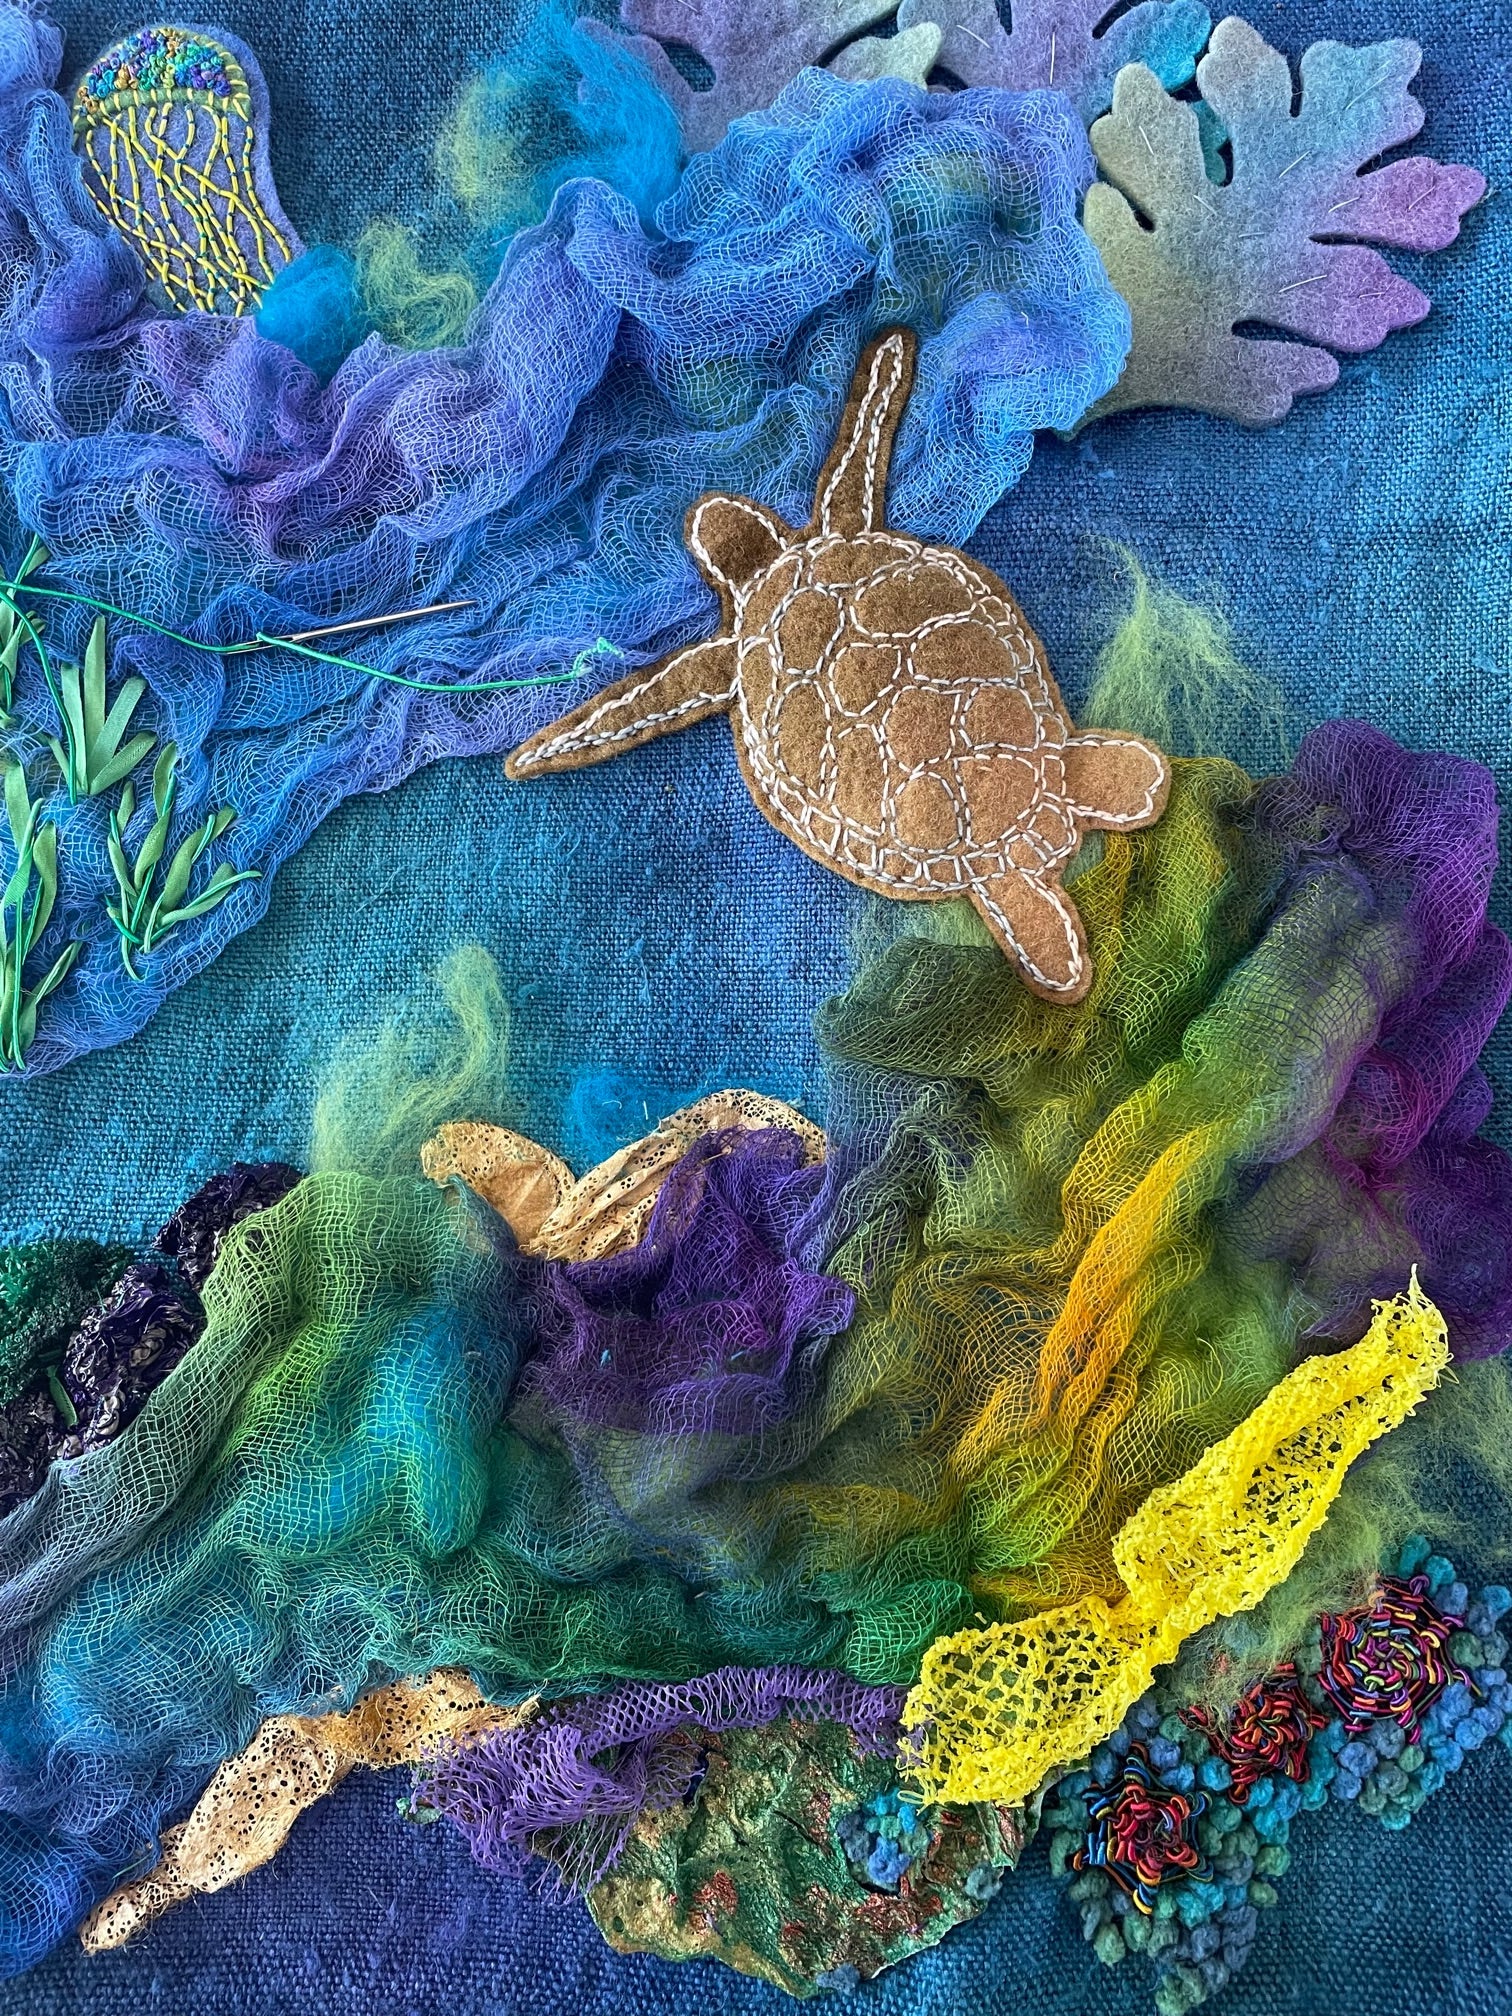 Underwater Magic Textile Collage Christine Noske Workshops Classes Macleay Island Colour Streams www.colourstreams.com.au